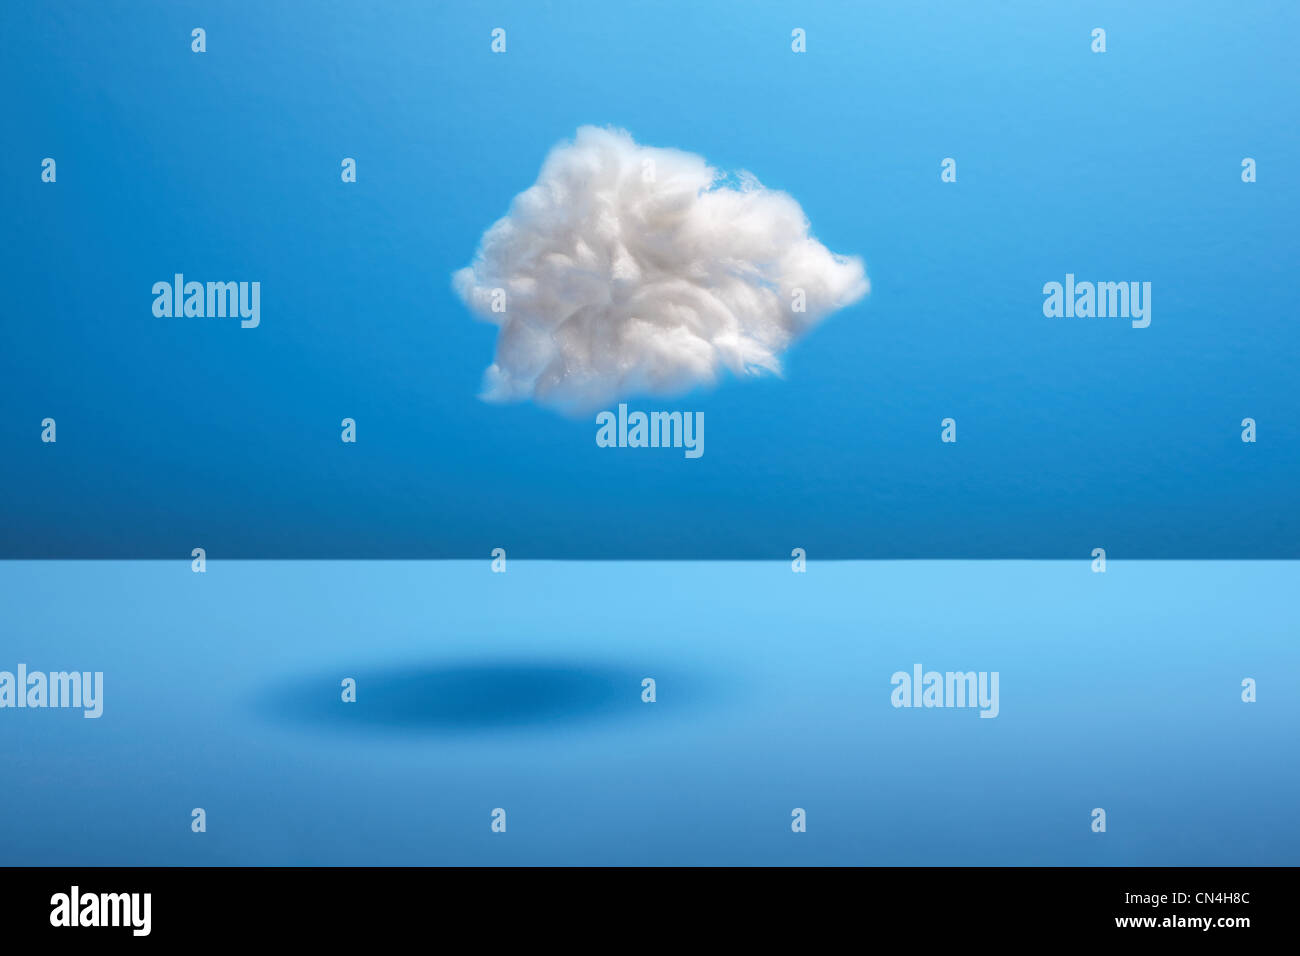 Cotton ball cloud against blue backdrop Stock Photo